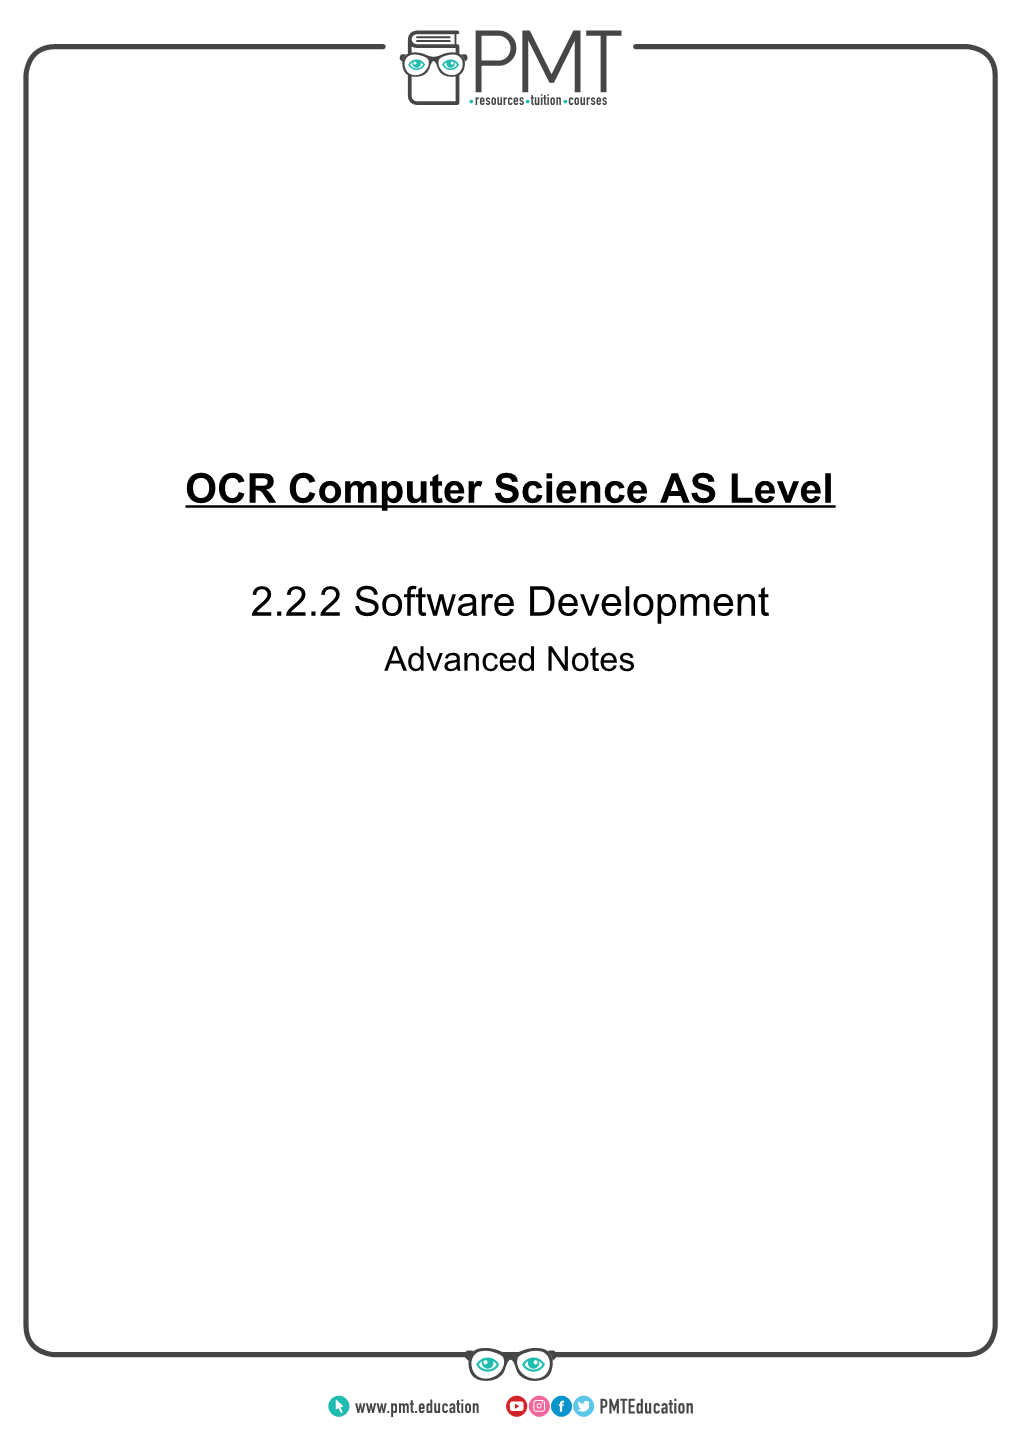 2.2.2 Software Development Advanced Notes